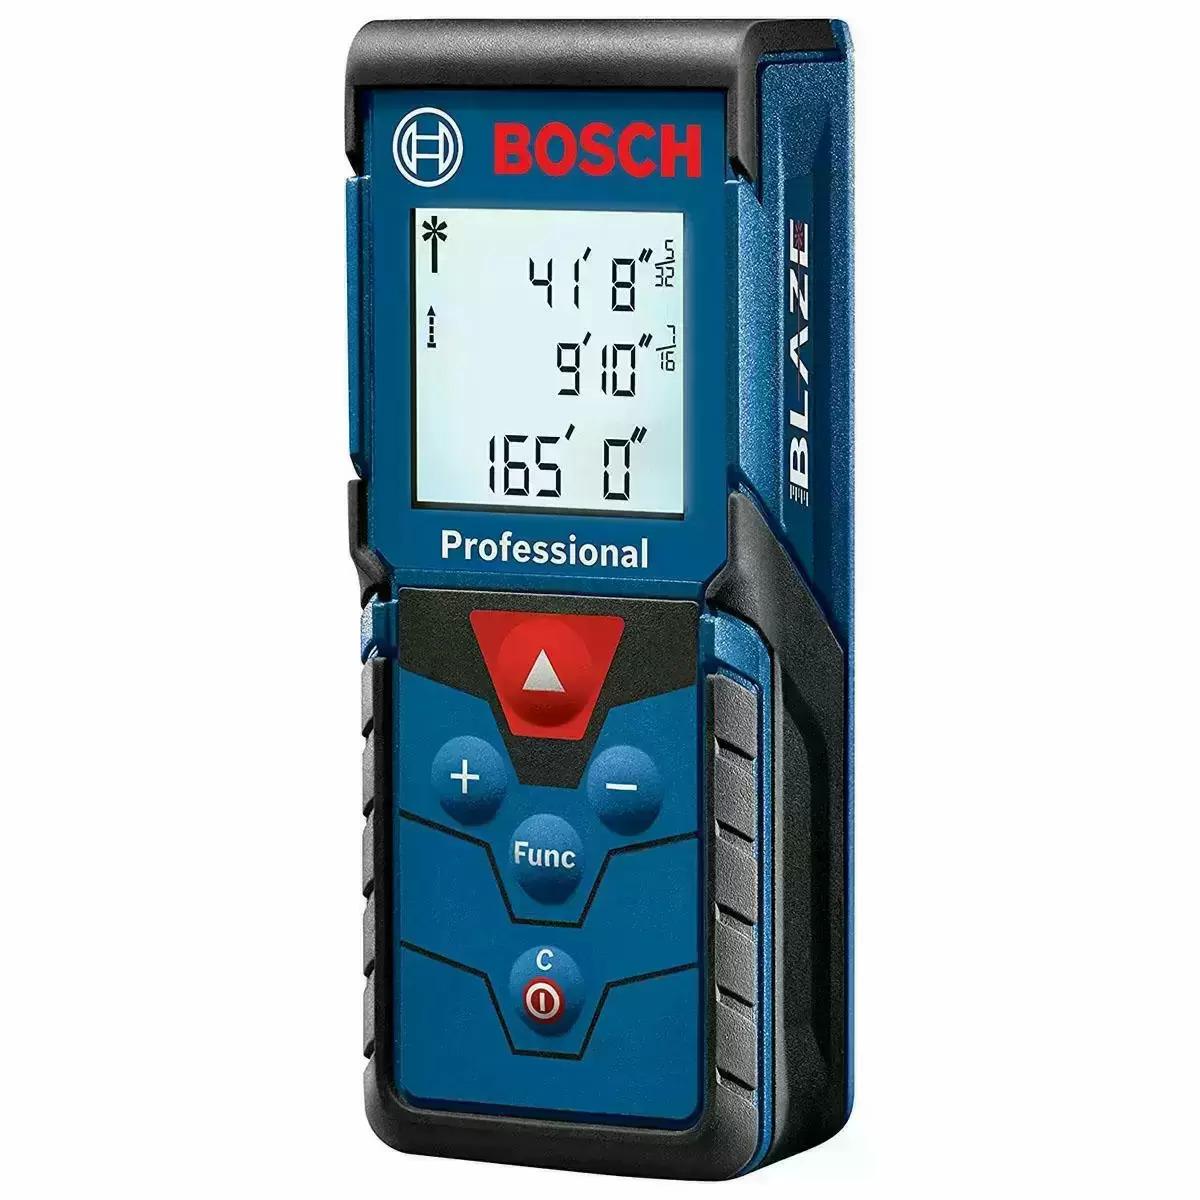 Bosch Blaze Pro Laser Distance Measure for $55.97 Shipped